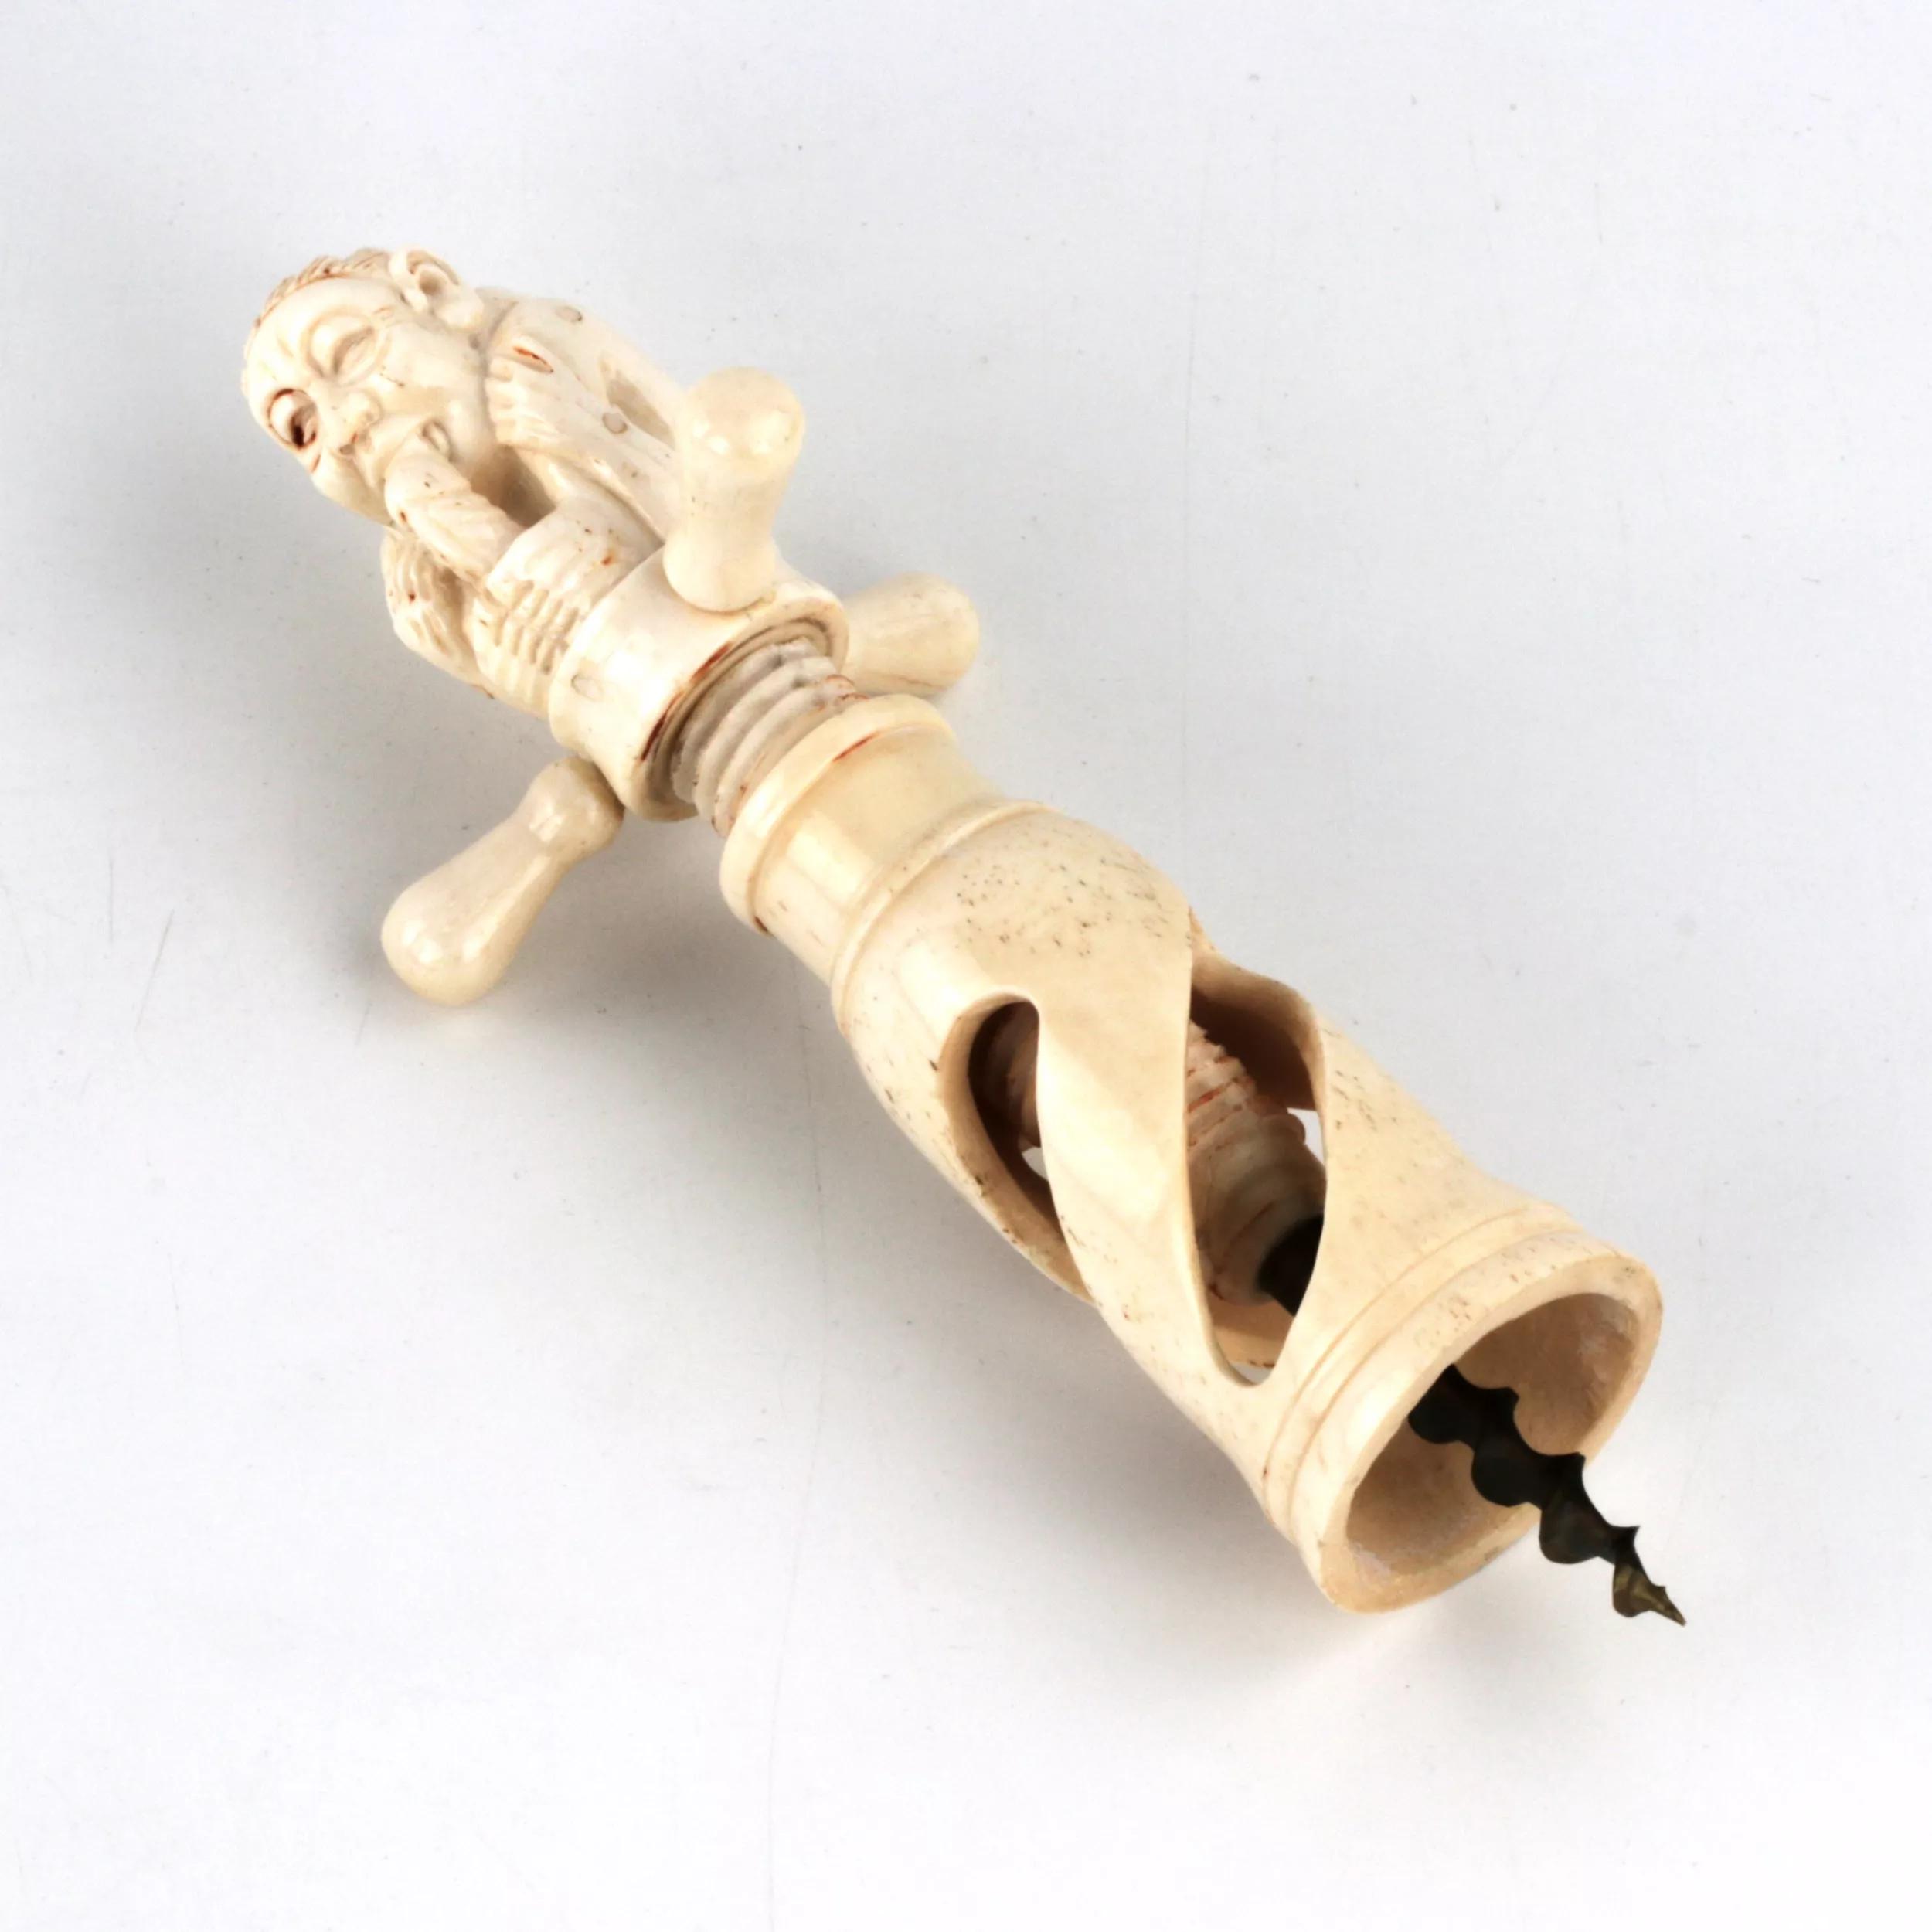 The rarest erotic ivory corkscrew of the 19th century.